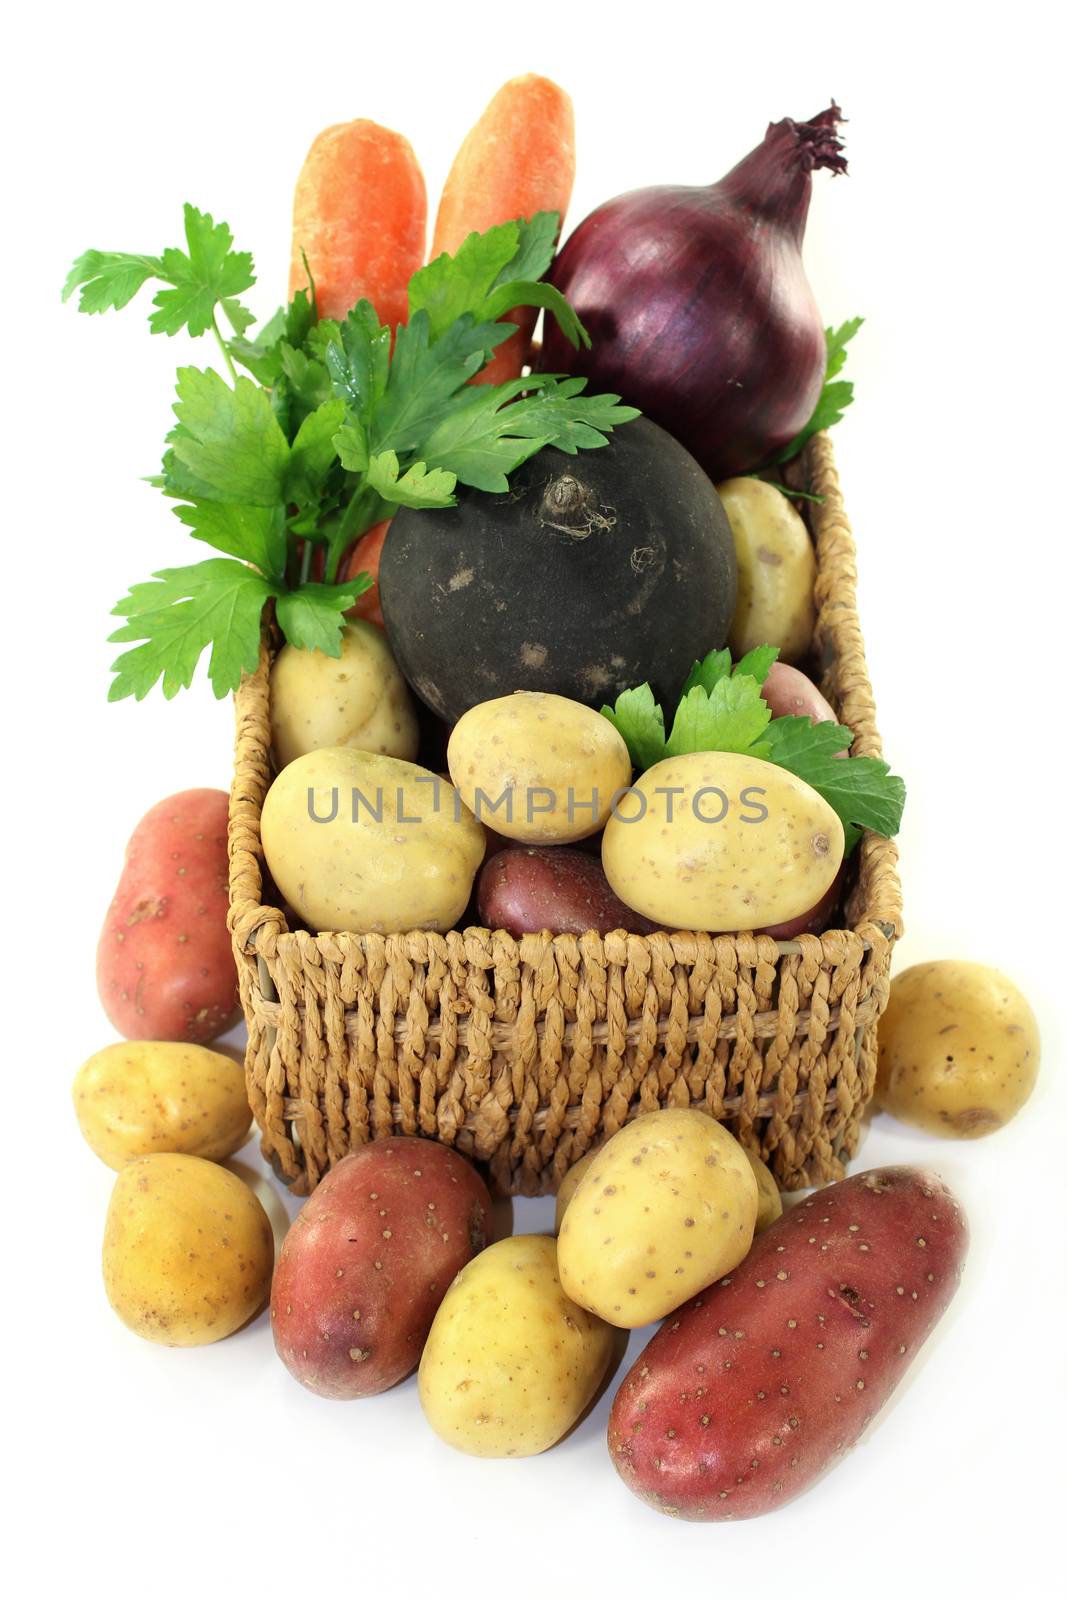 different, fresh vegetable varieties in a basket